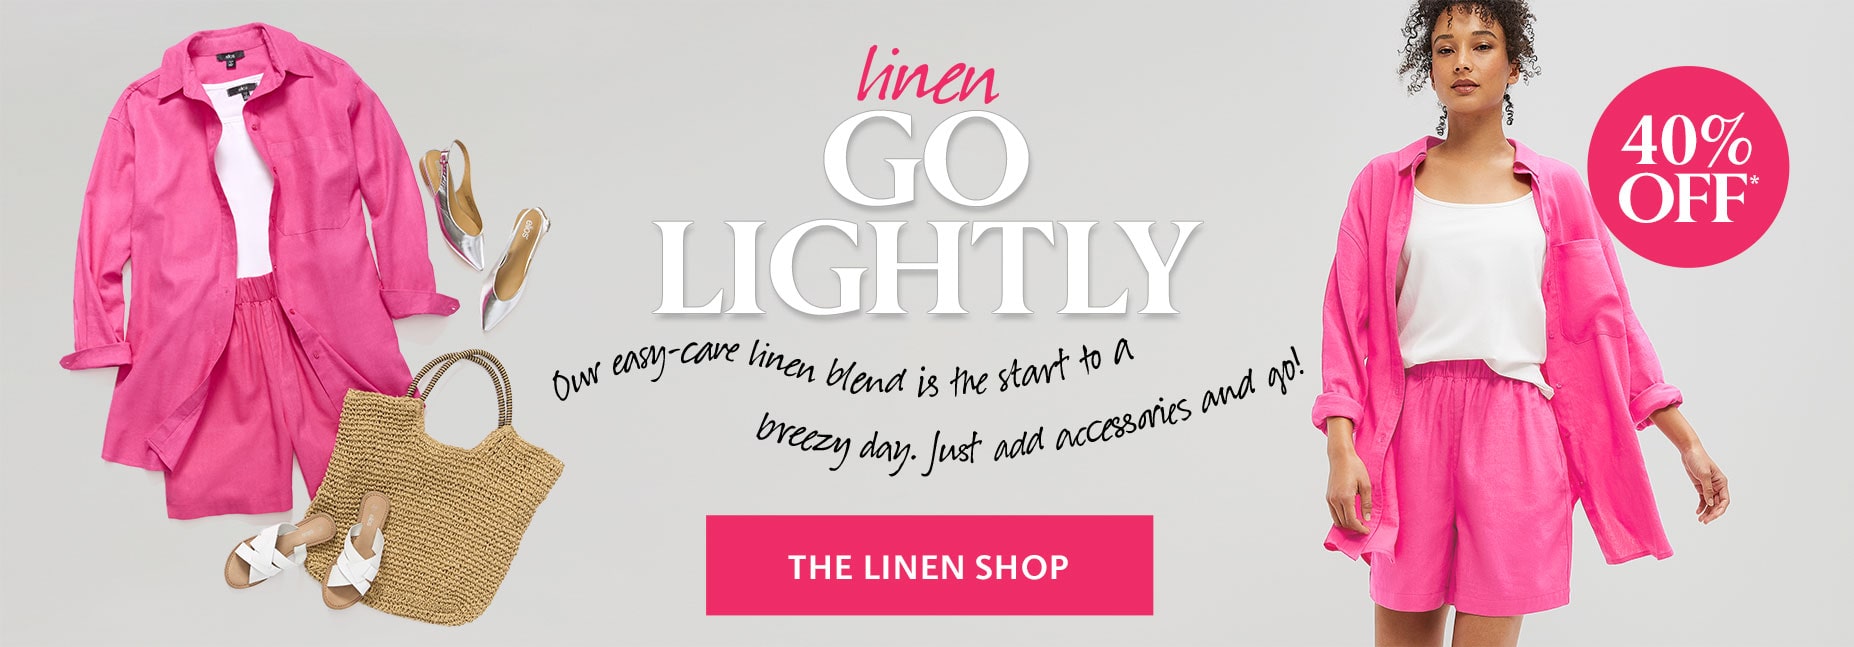 Go Lightly - The Linen Shop